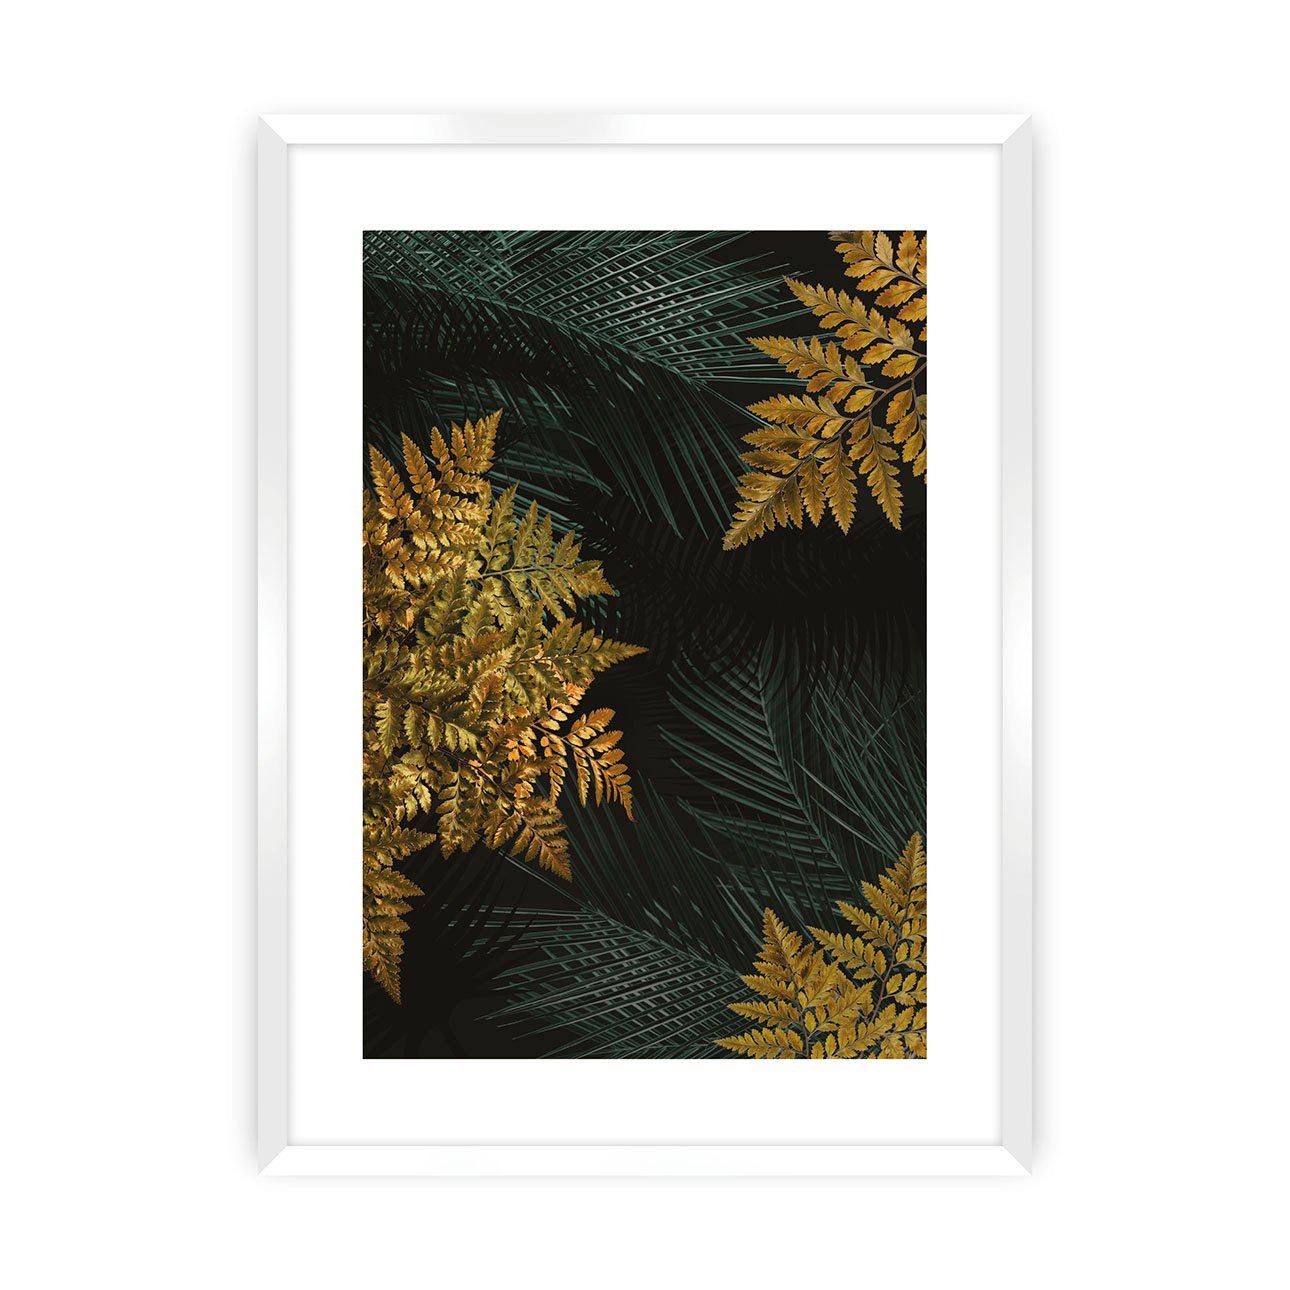 Dekoria Plakát Golden Leaves II, 30 x 40 cm, Zvolit rámek: Bílý